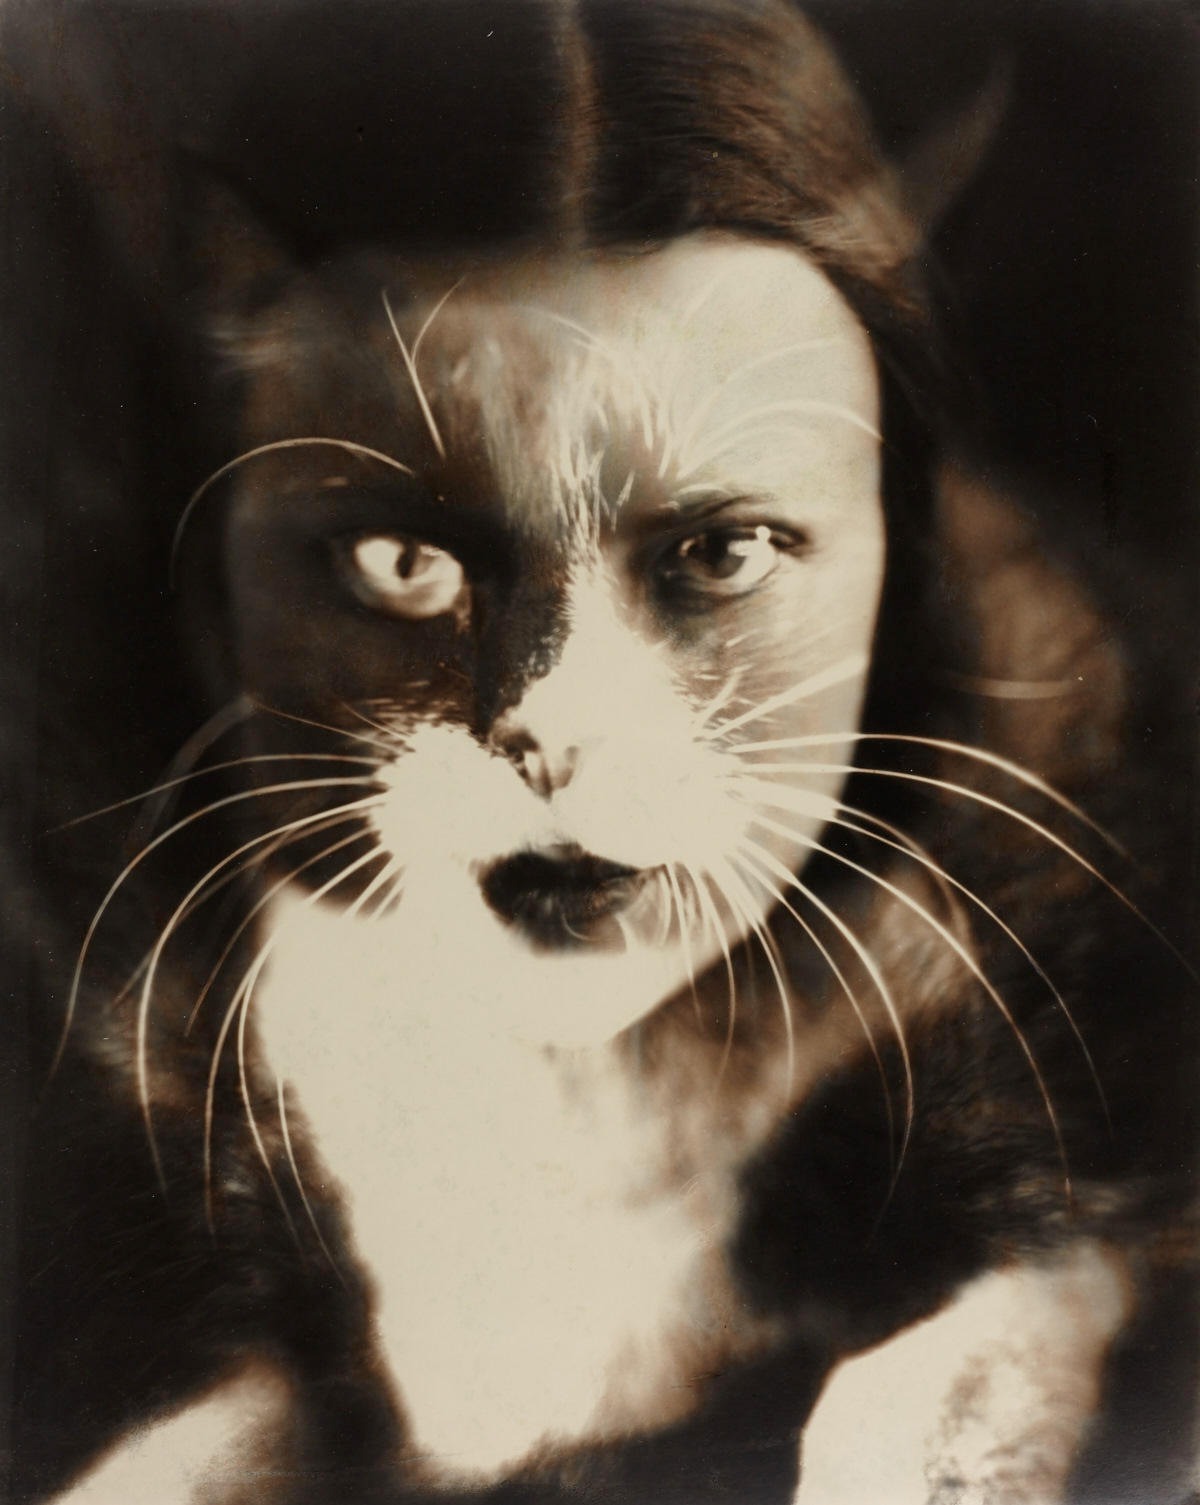 WANDA WULZ ‘Io + Gatto’ (Selbstporträt / Self-portrait), 1932